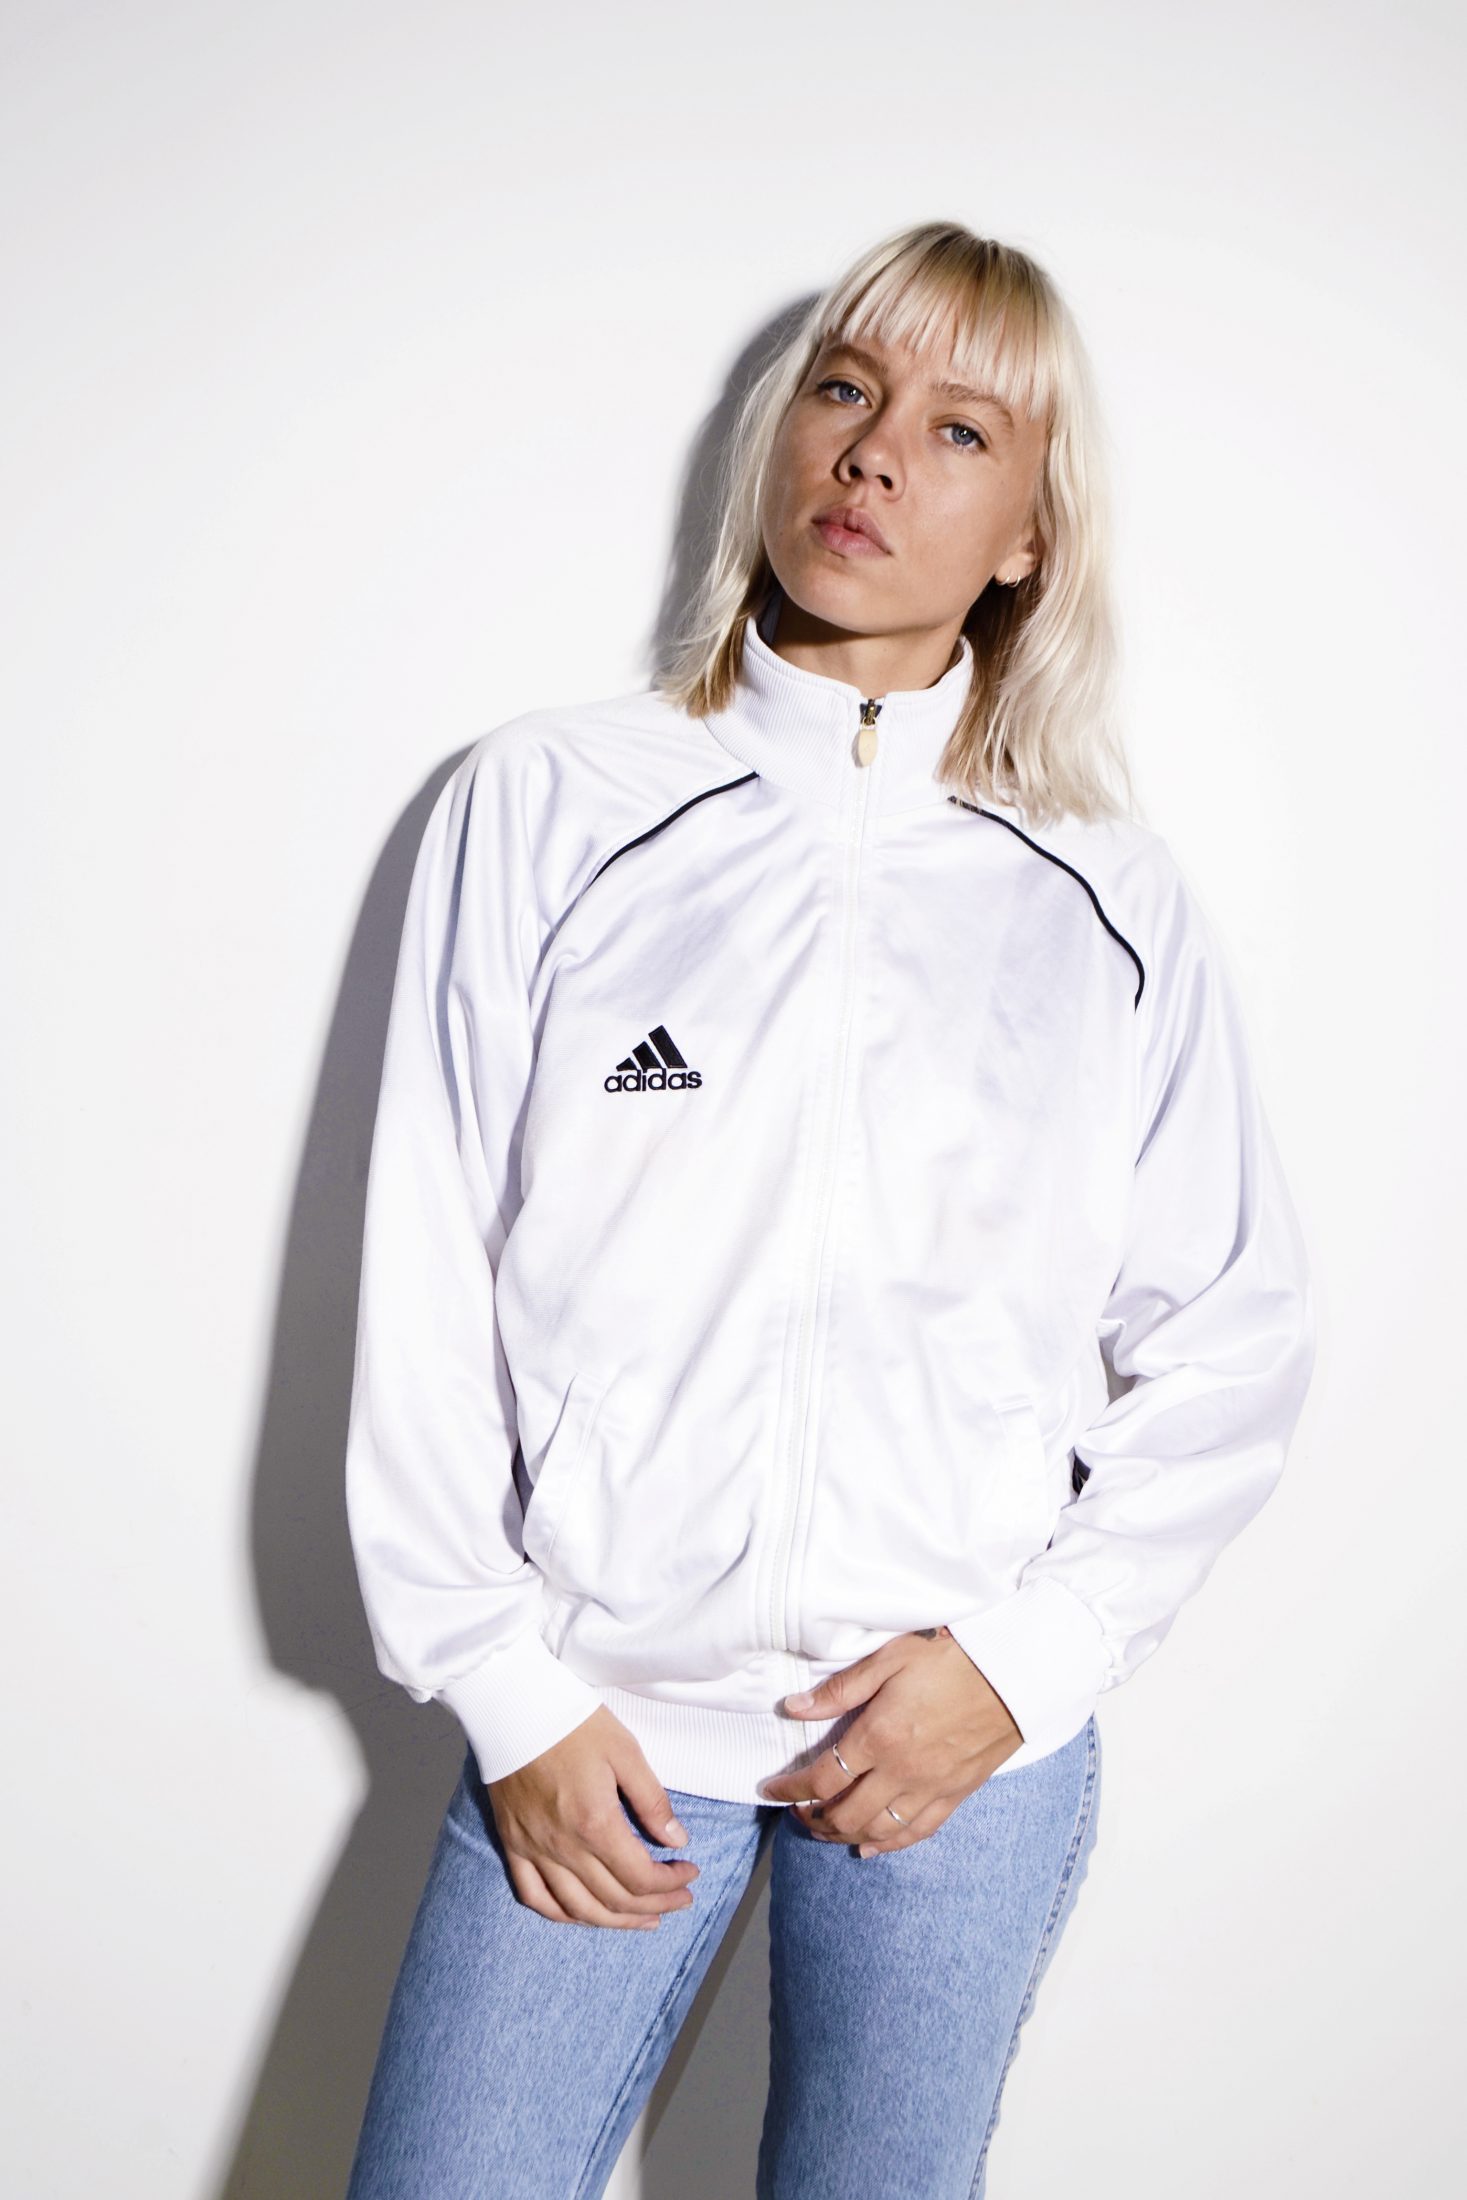 Adidas track jacket white | HOT MILK vintage clothing online in Europe